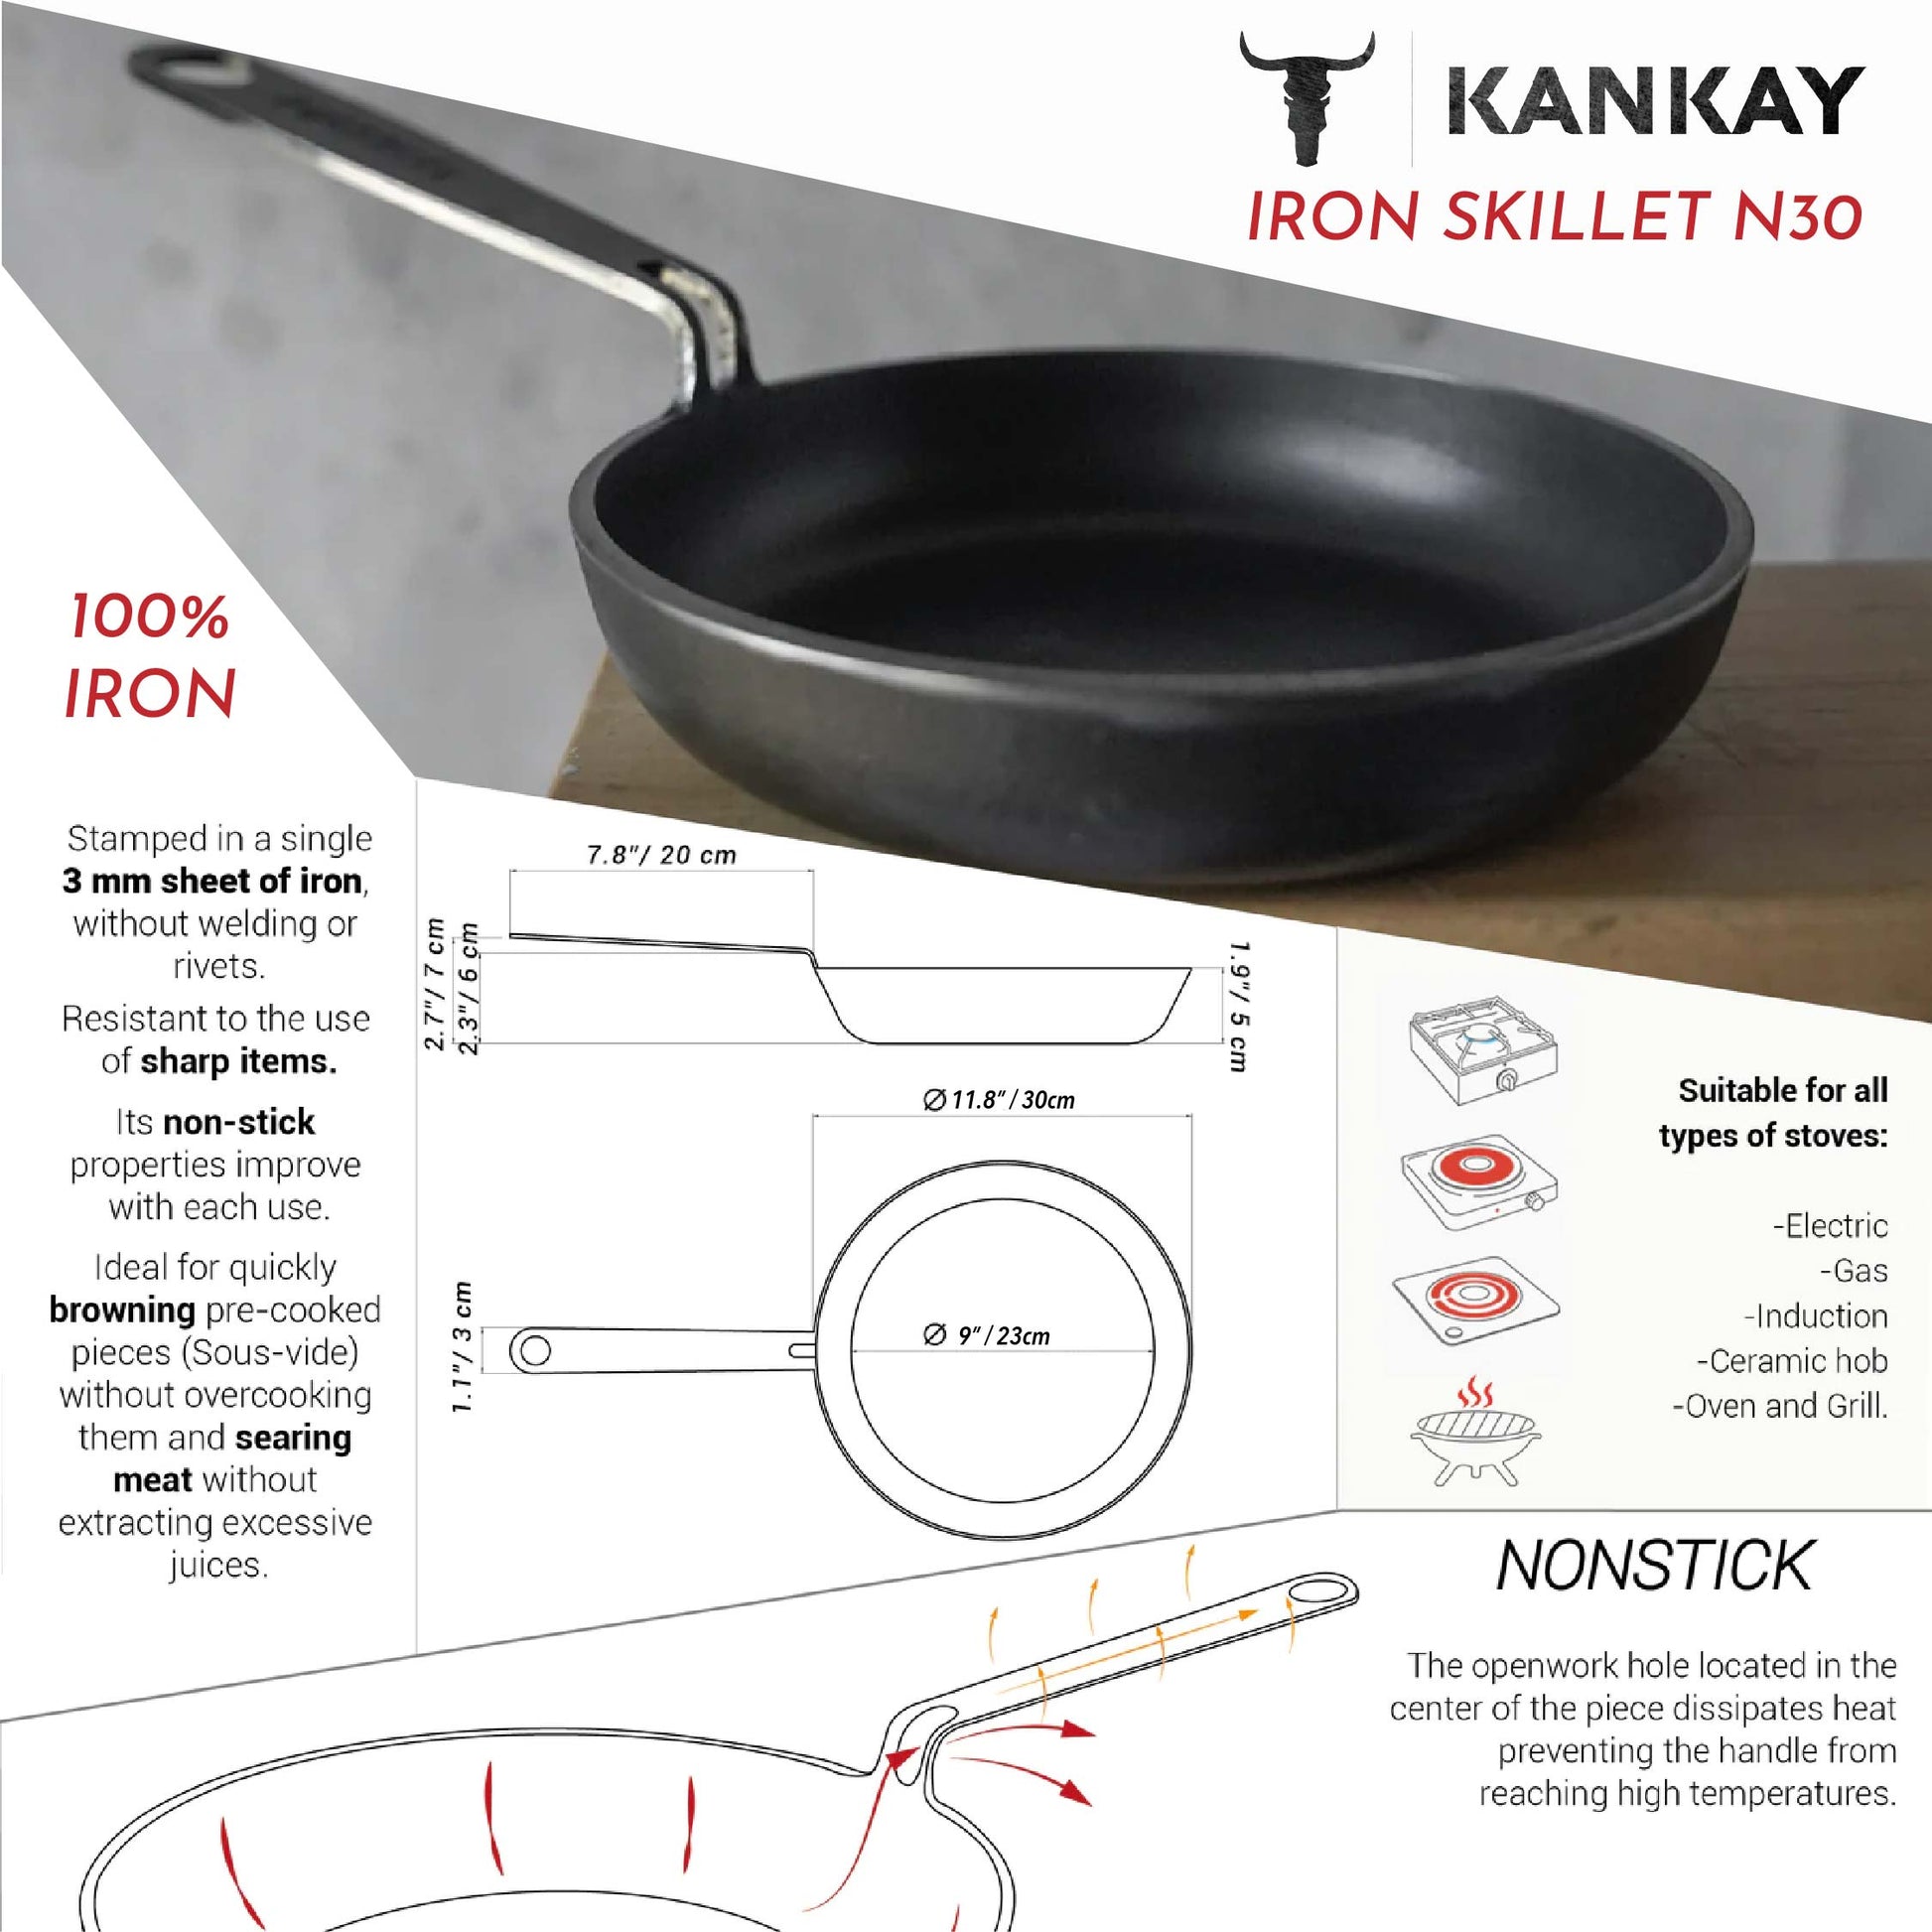 Nonstick 3 Piece Kitchen Frying Pan Set 7.8, 10, & 11.8 Inch